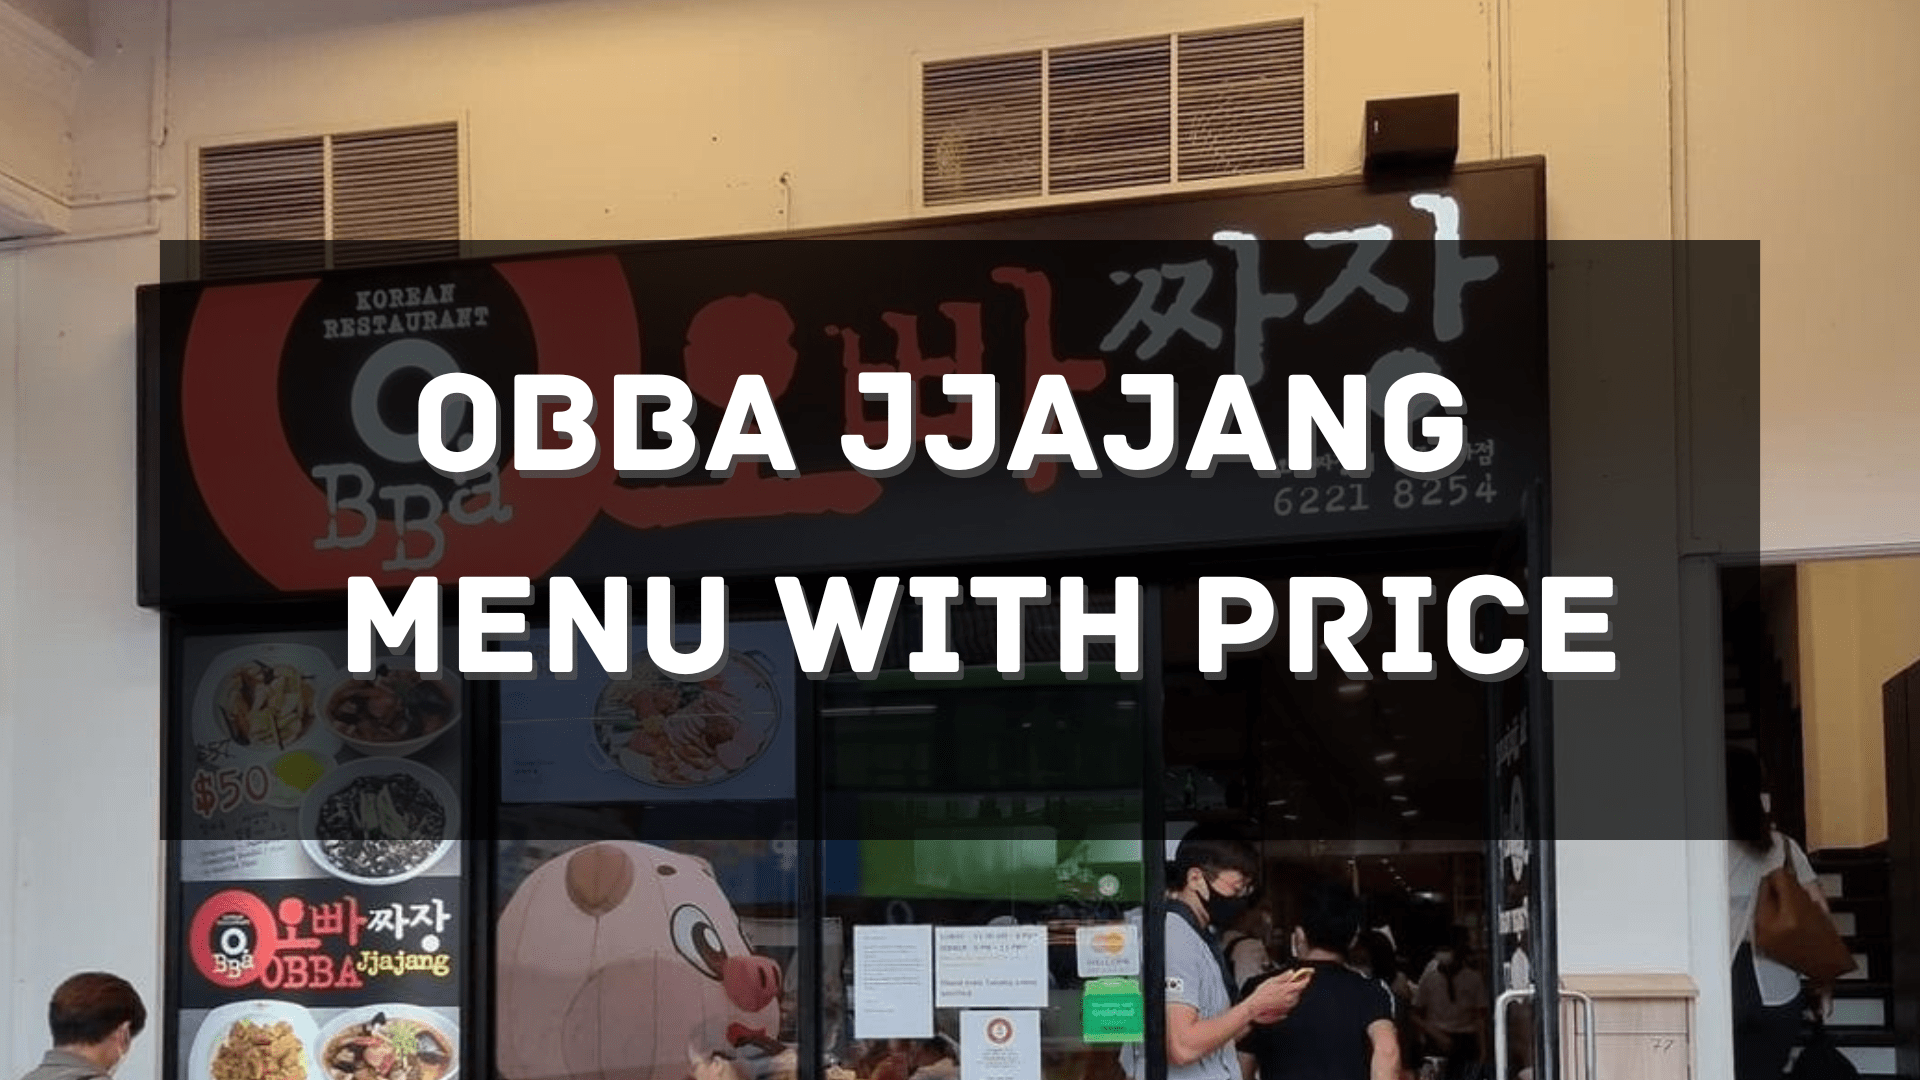 Obba Jjajang Menu with Price Singapore